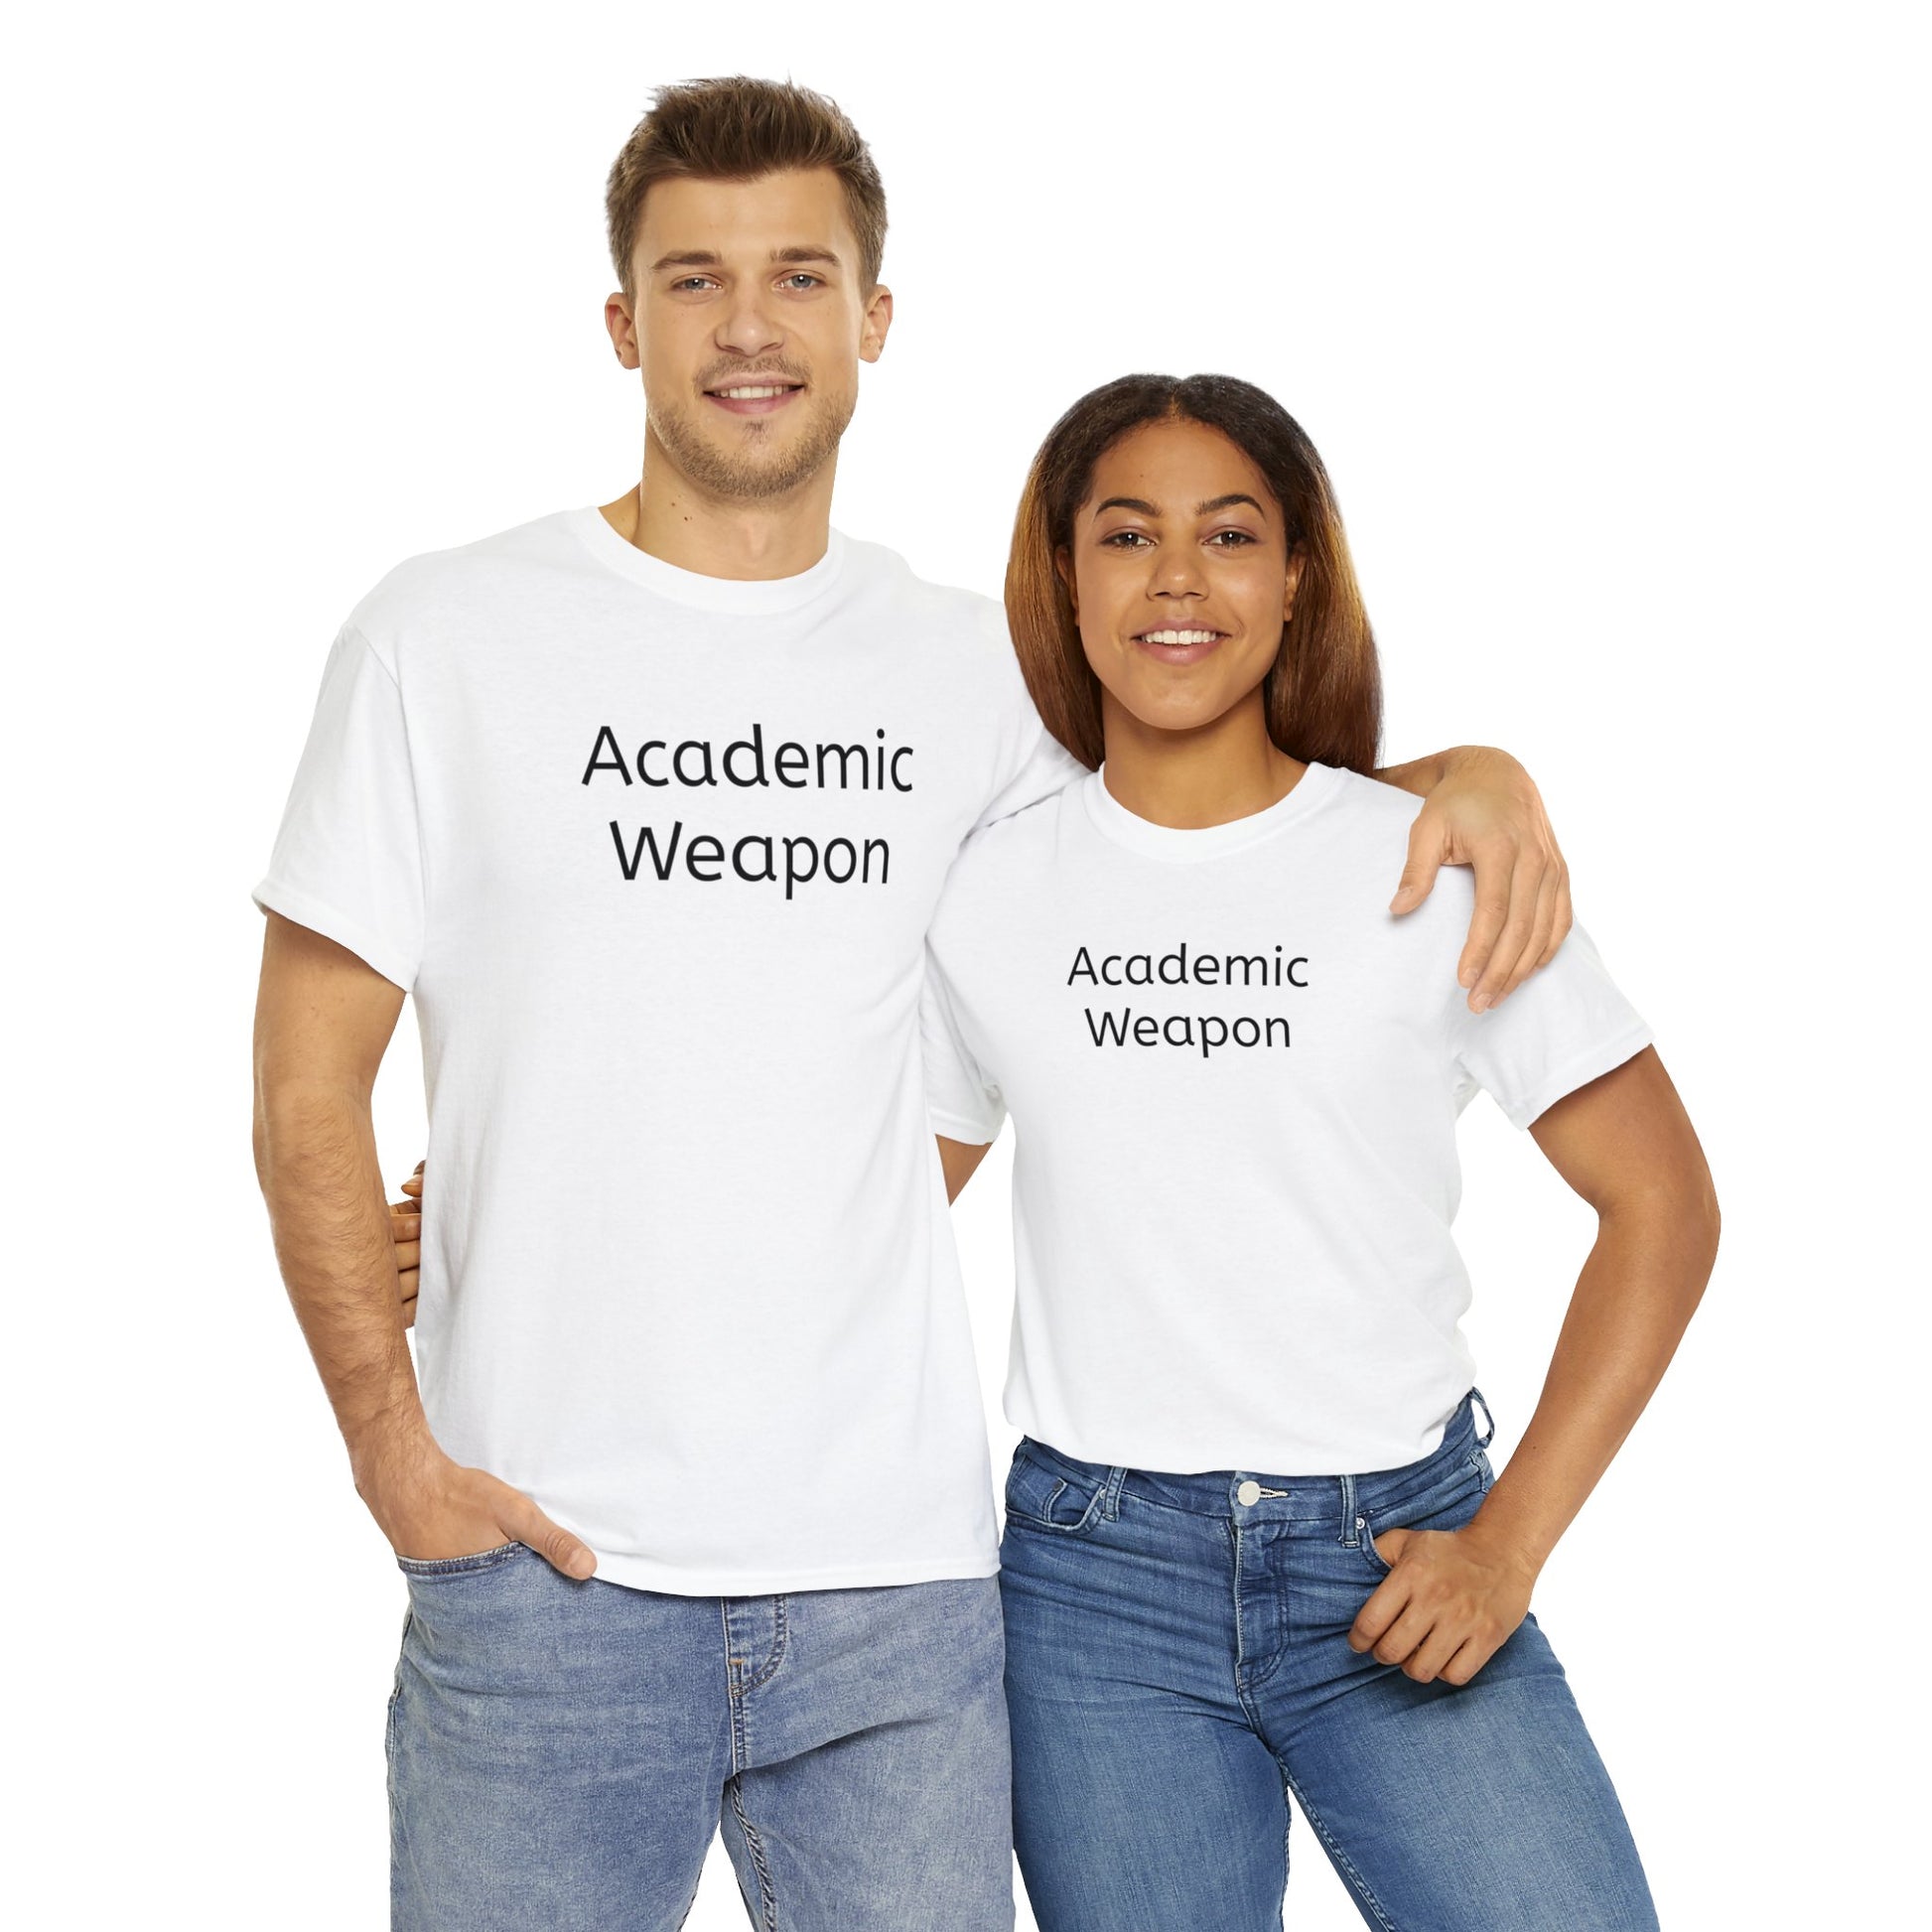 "Academic Weapon" Tee